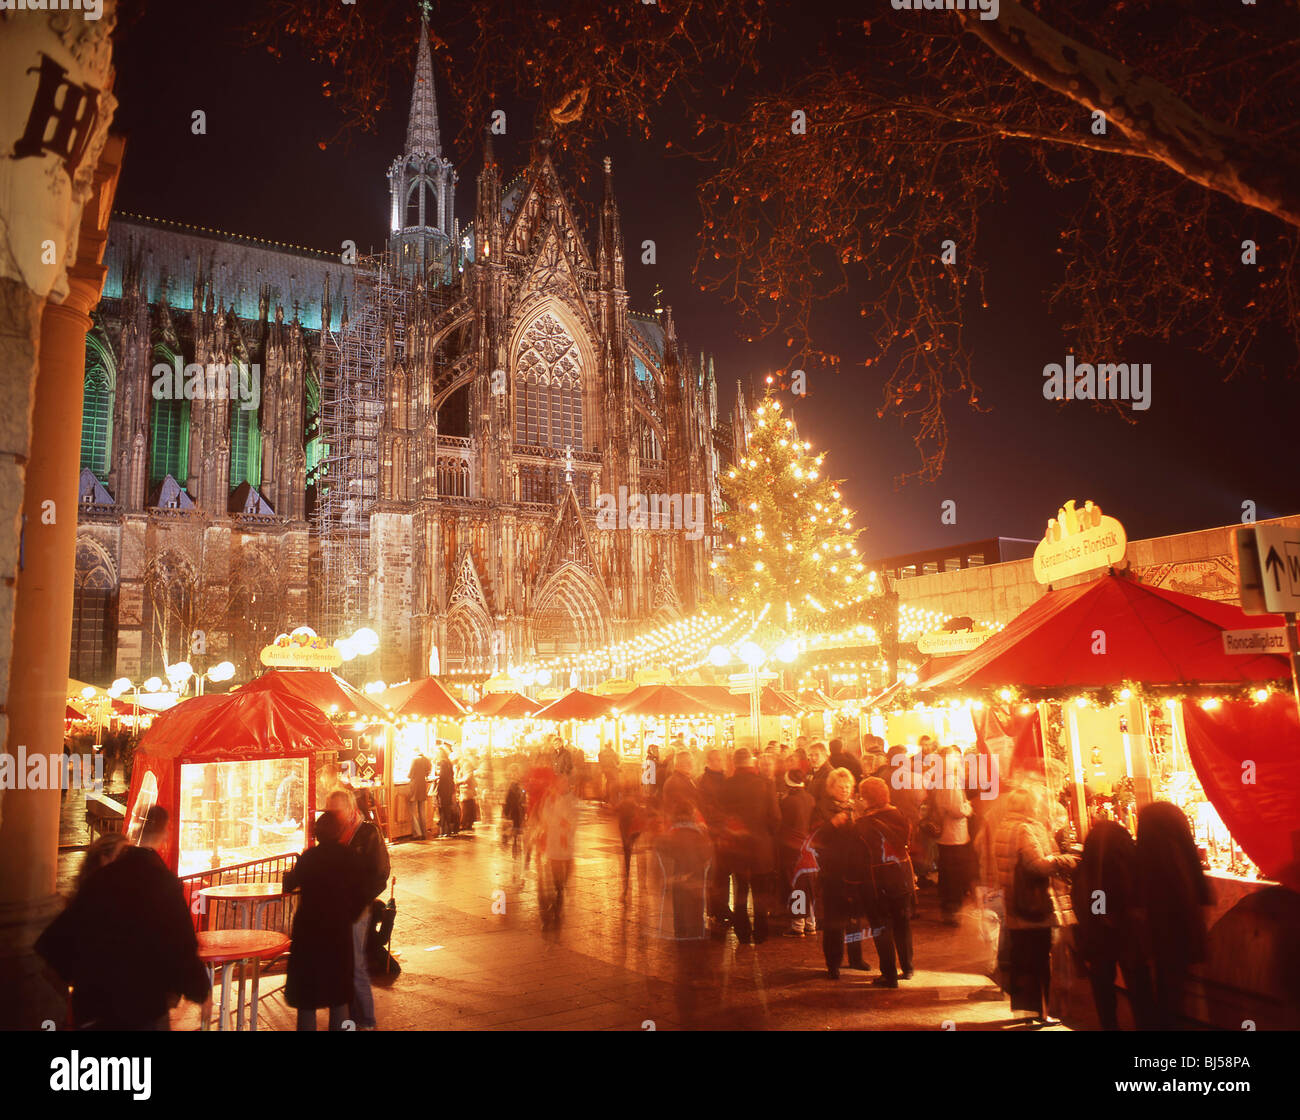 Alter Markt Christmas Market at dusk, Cologne (Koln), Nordrhein-Westfalen, Federal Republic of Germany Stock Photo